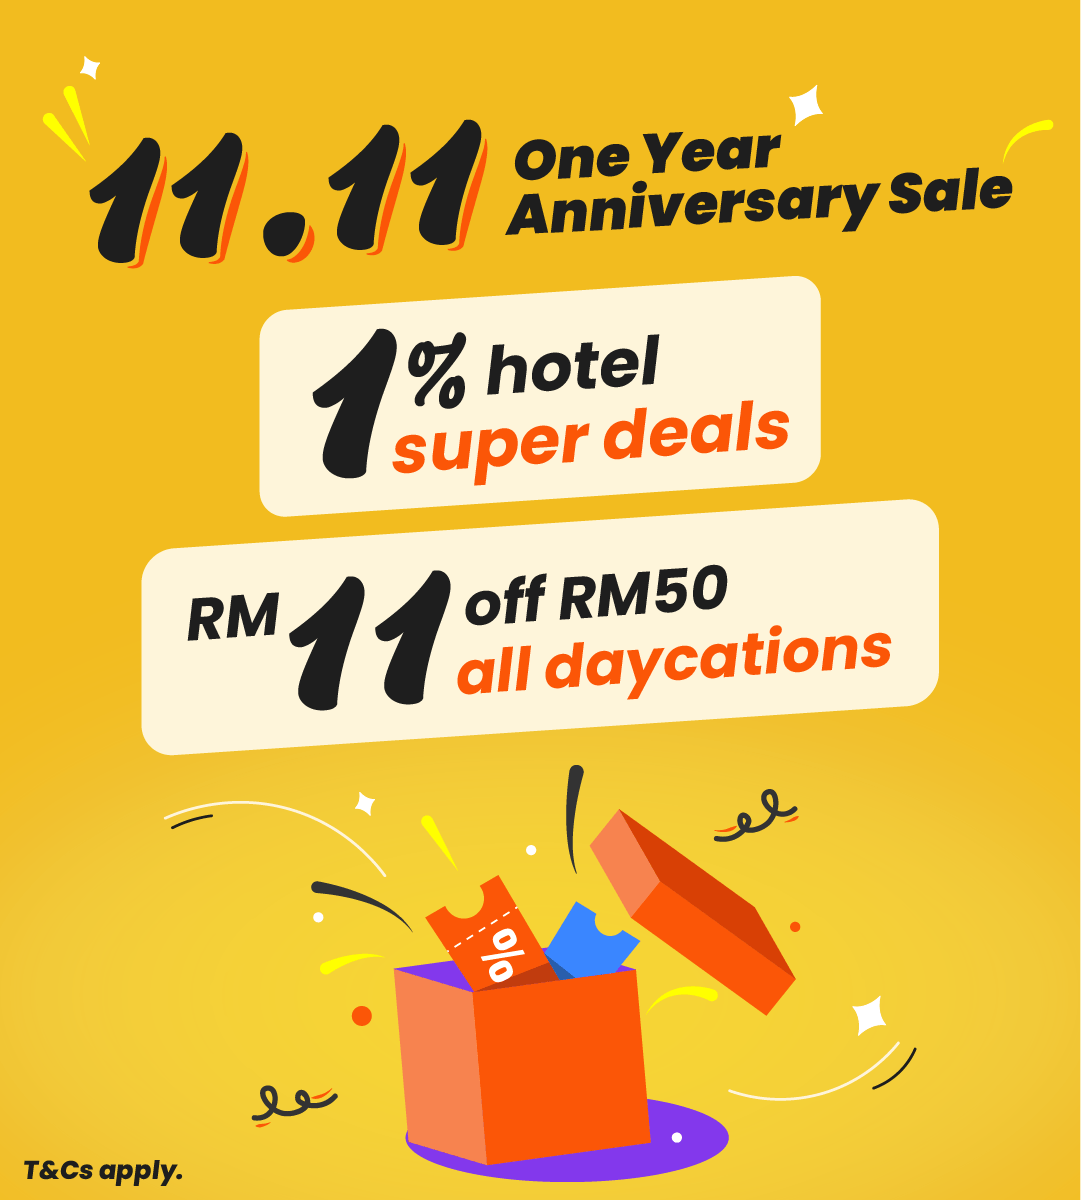 11.11 Anniversary Sale: 1% Super Deals + RM11 Off